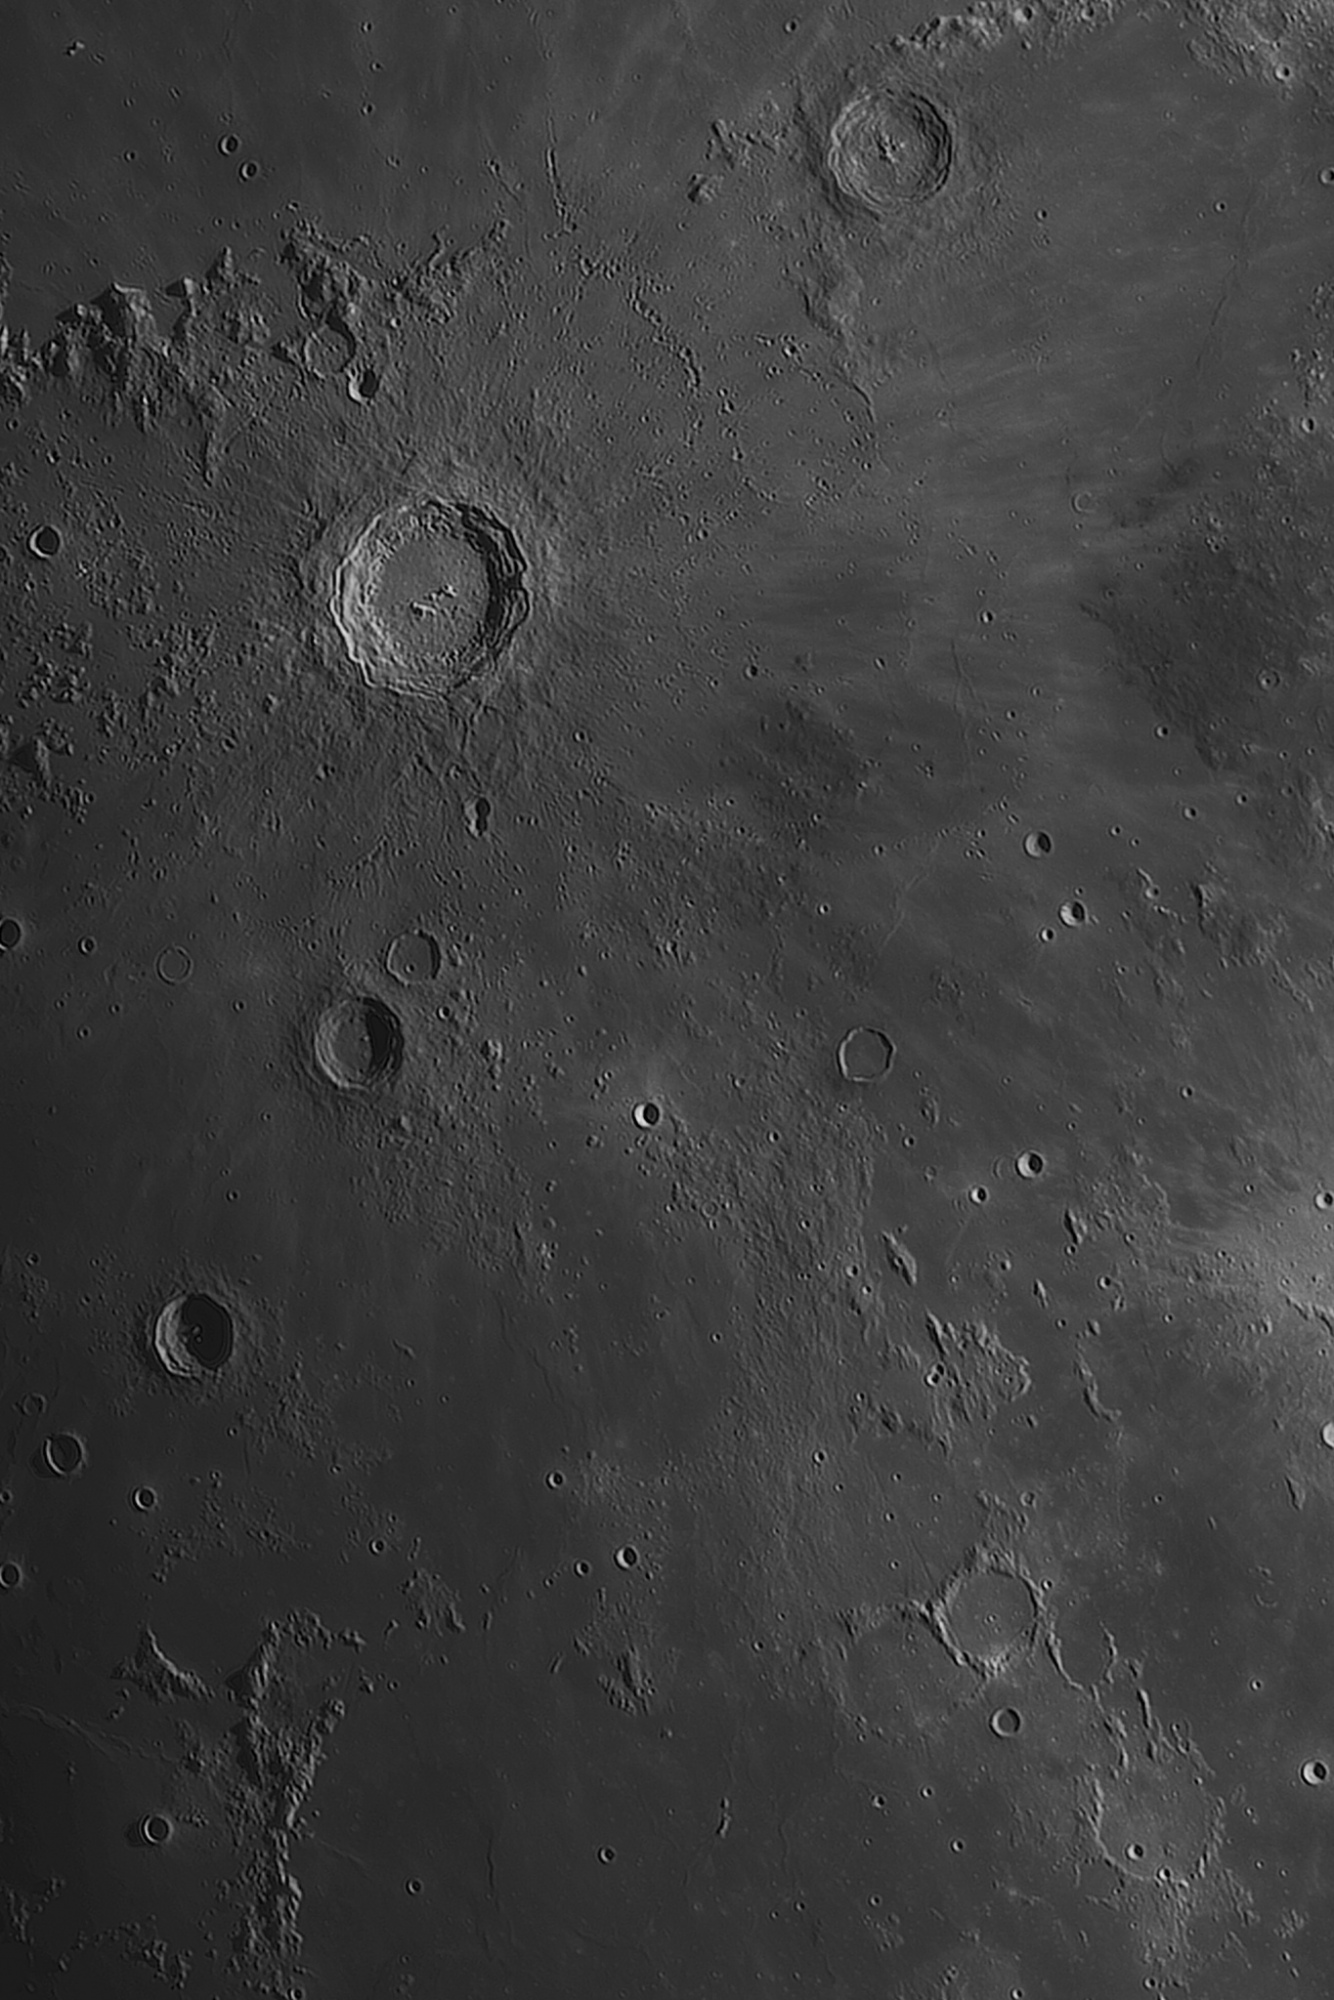 Moon 24 03 21-crop2-2048.jpg